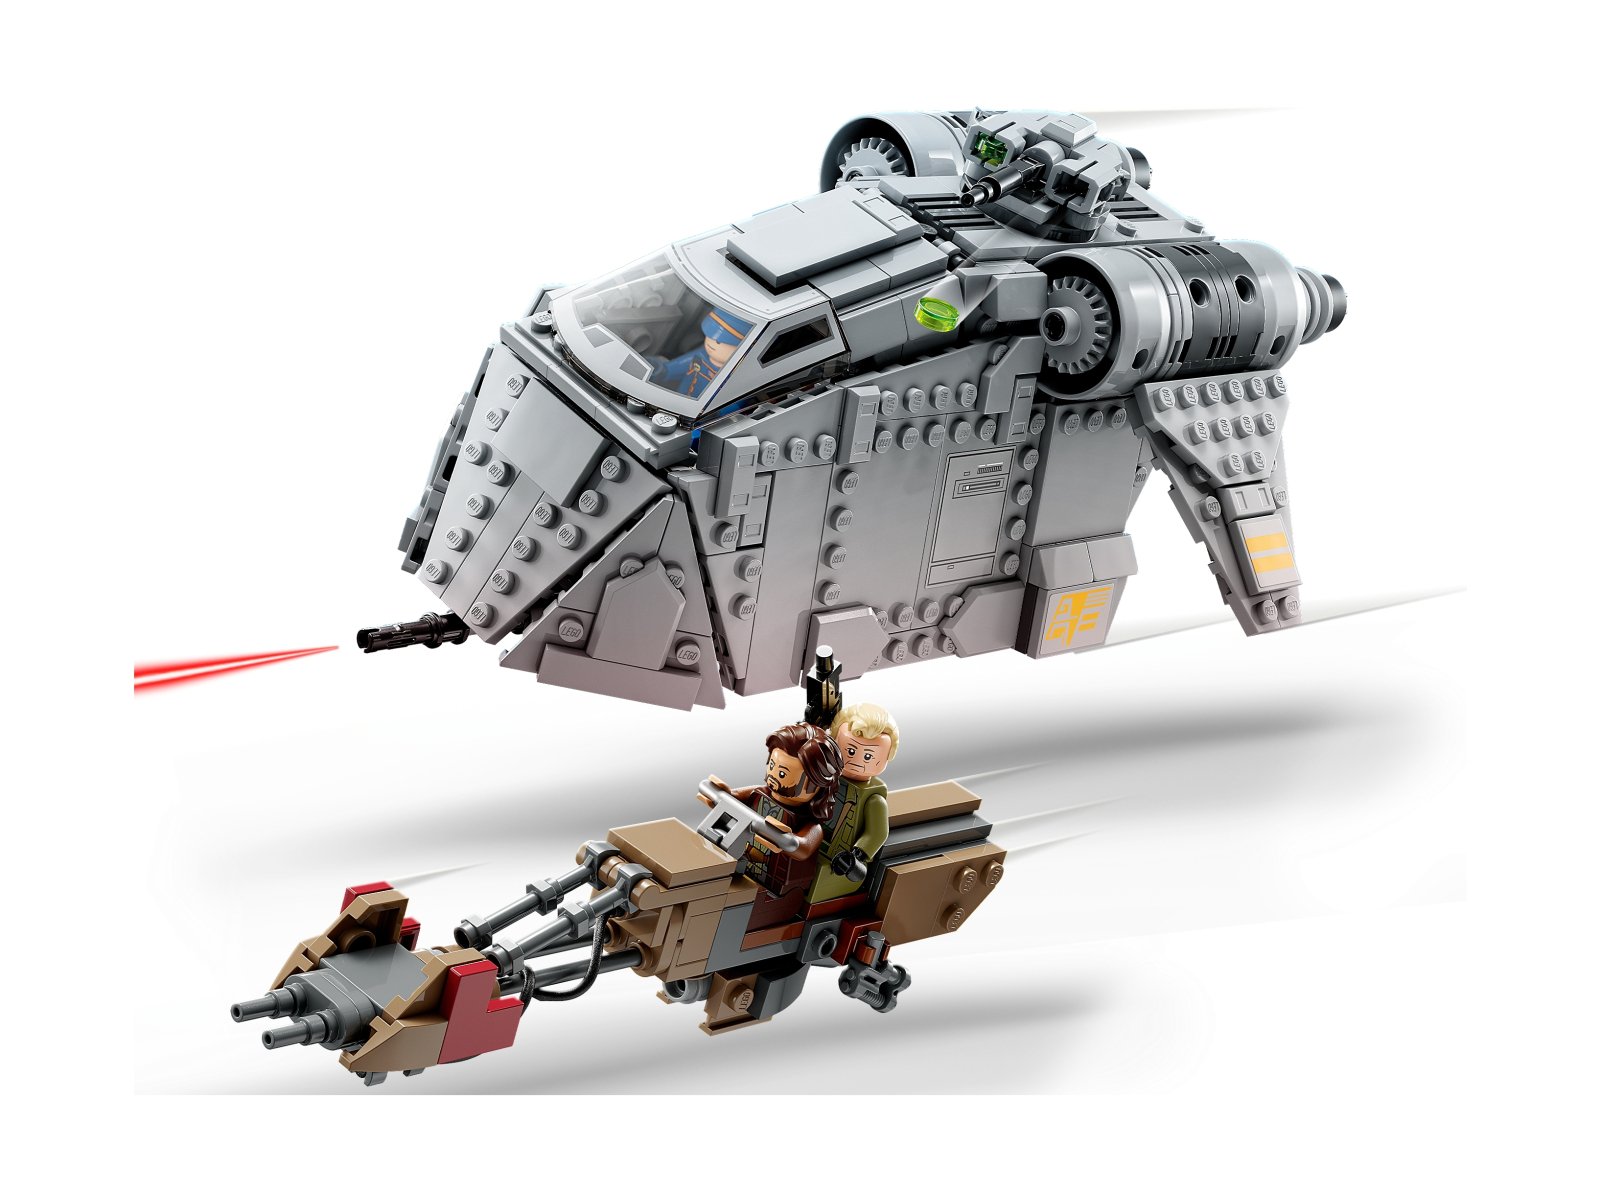 LEGO Star Wars Zasadzka na Ferrix™ 75338